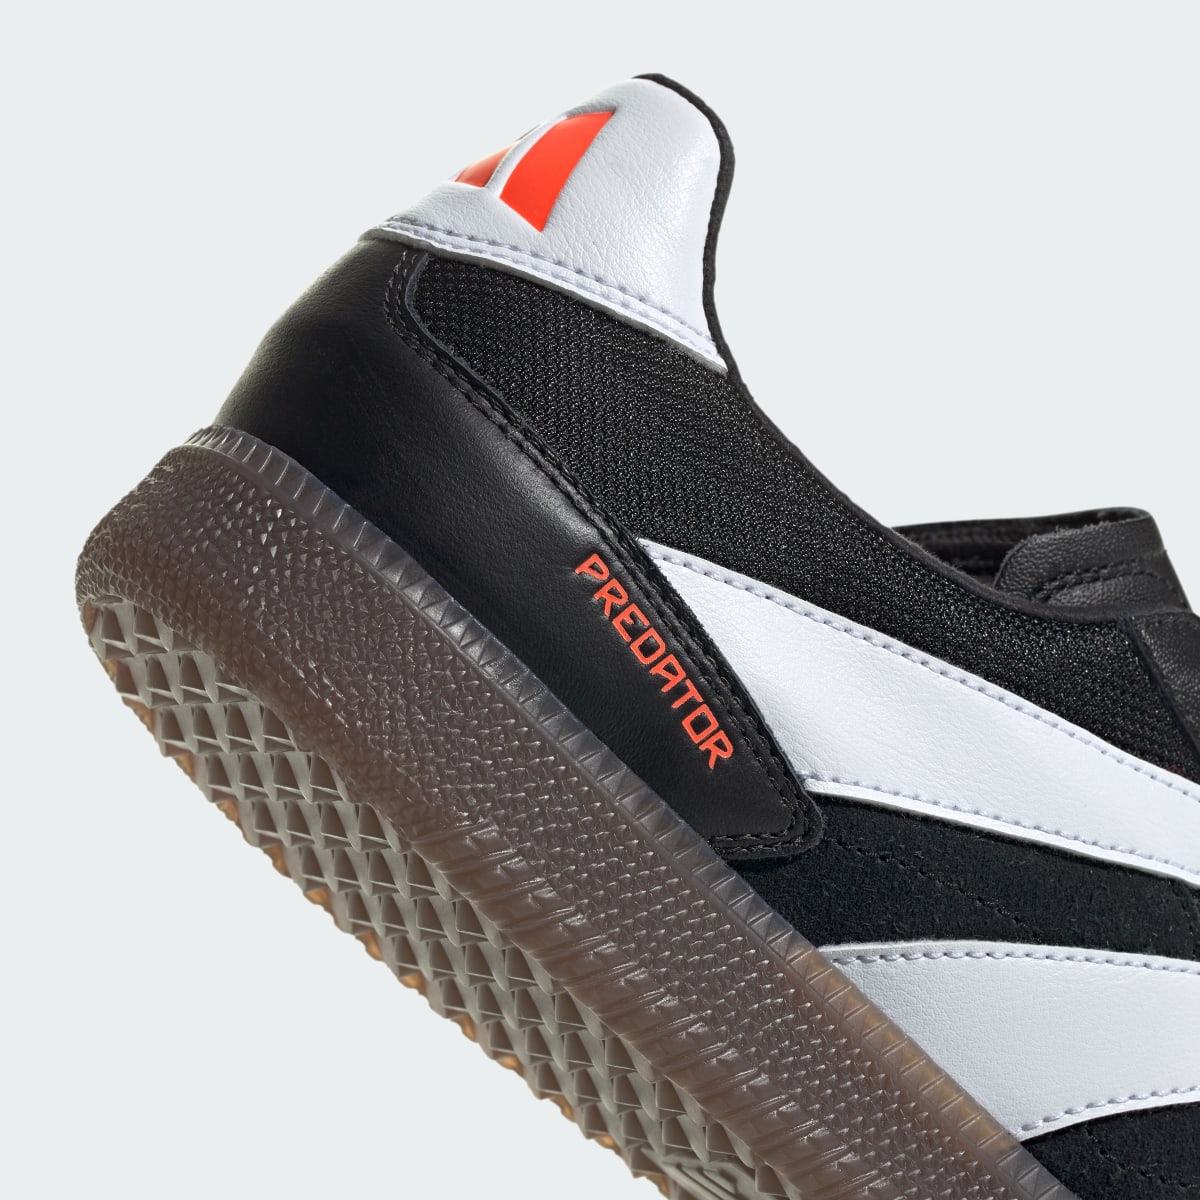 Adidas Predator Freestyle Football Boots. 9